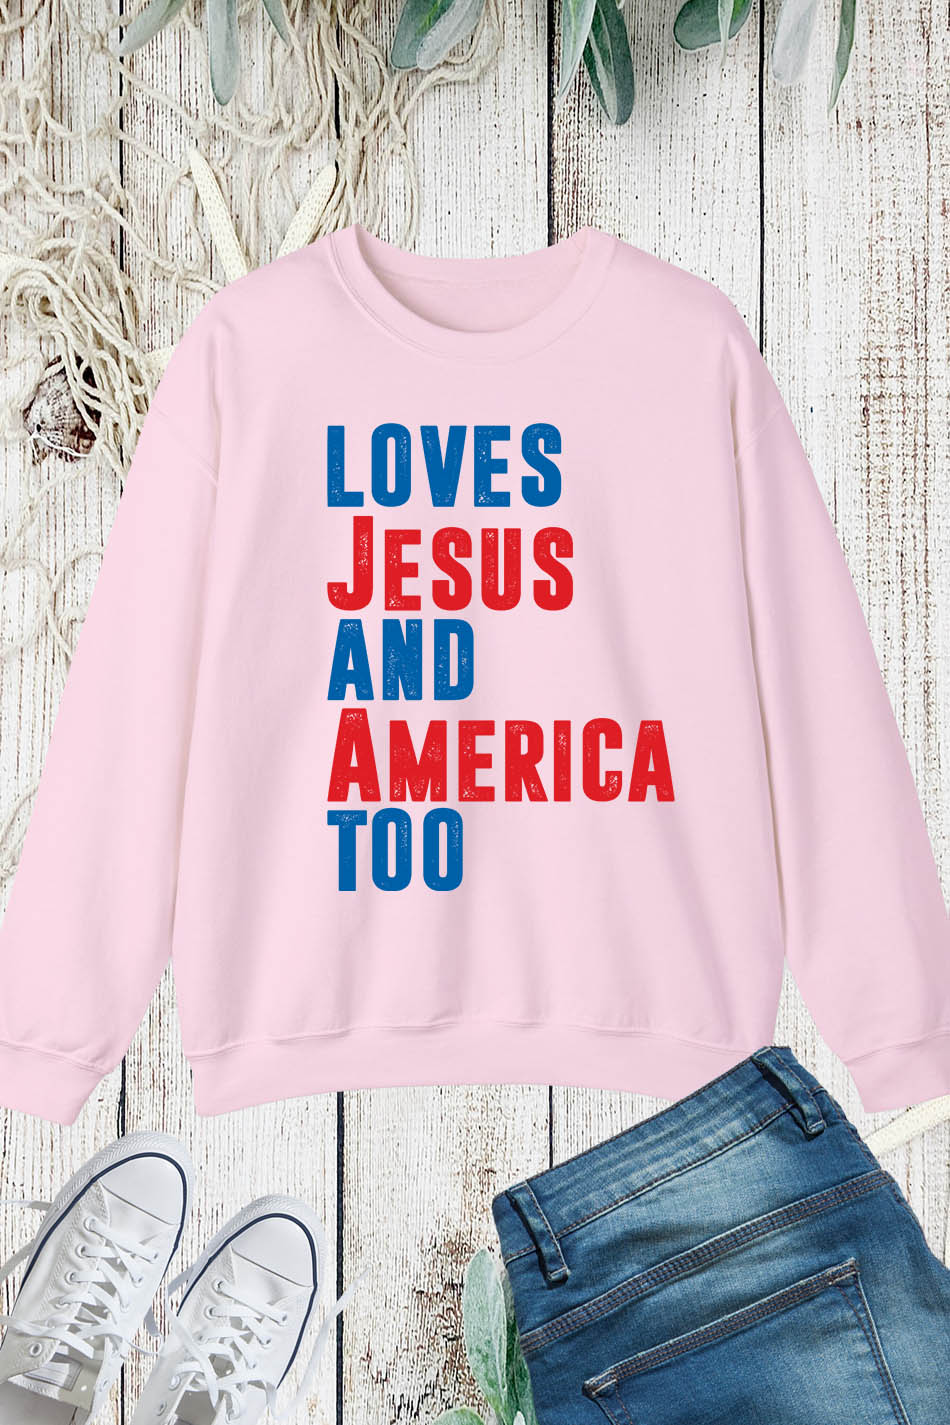 Loves Jesus and America Too Sweatshirt